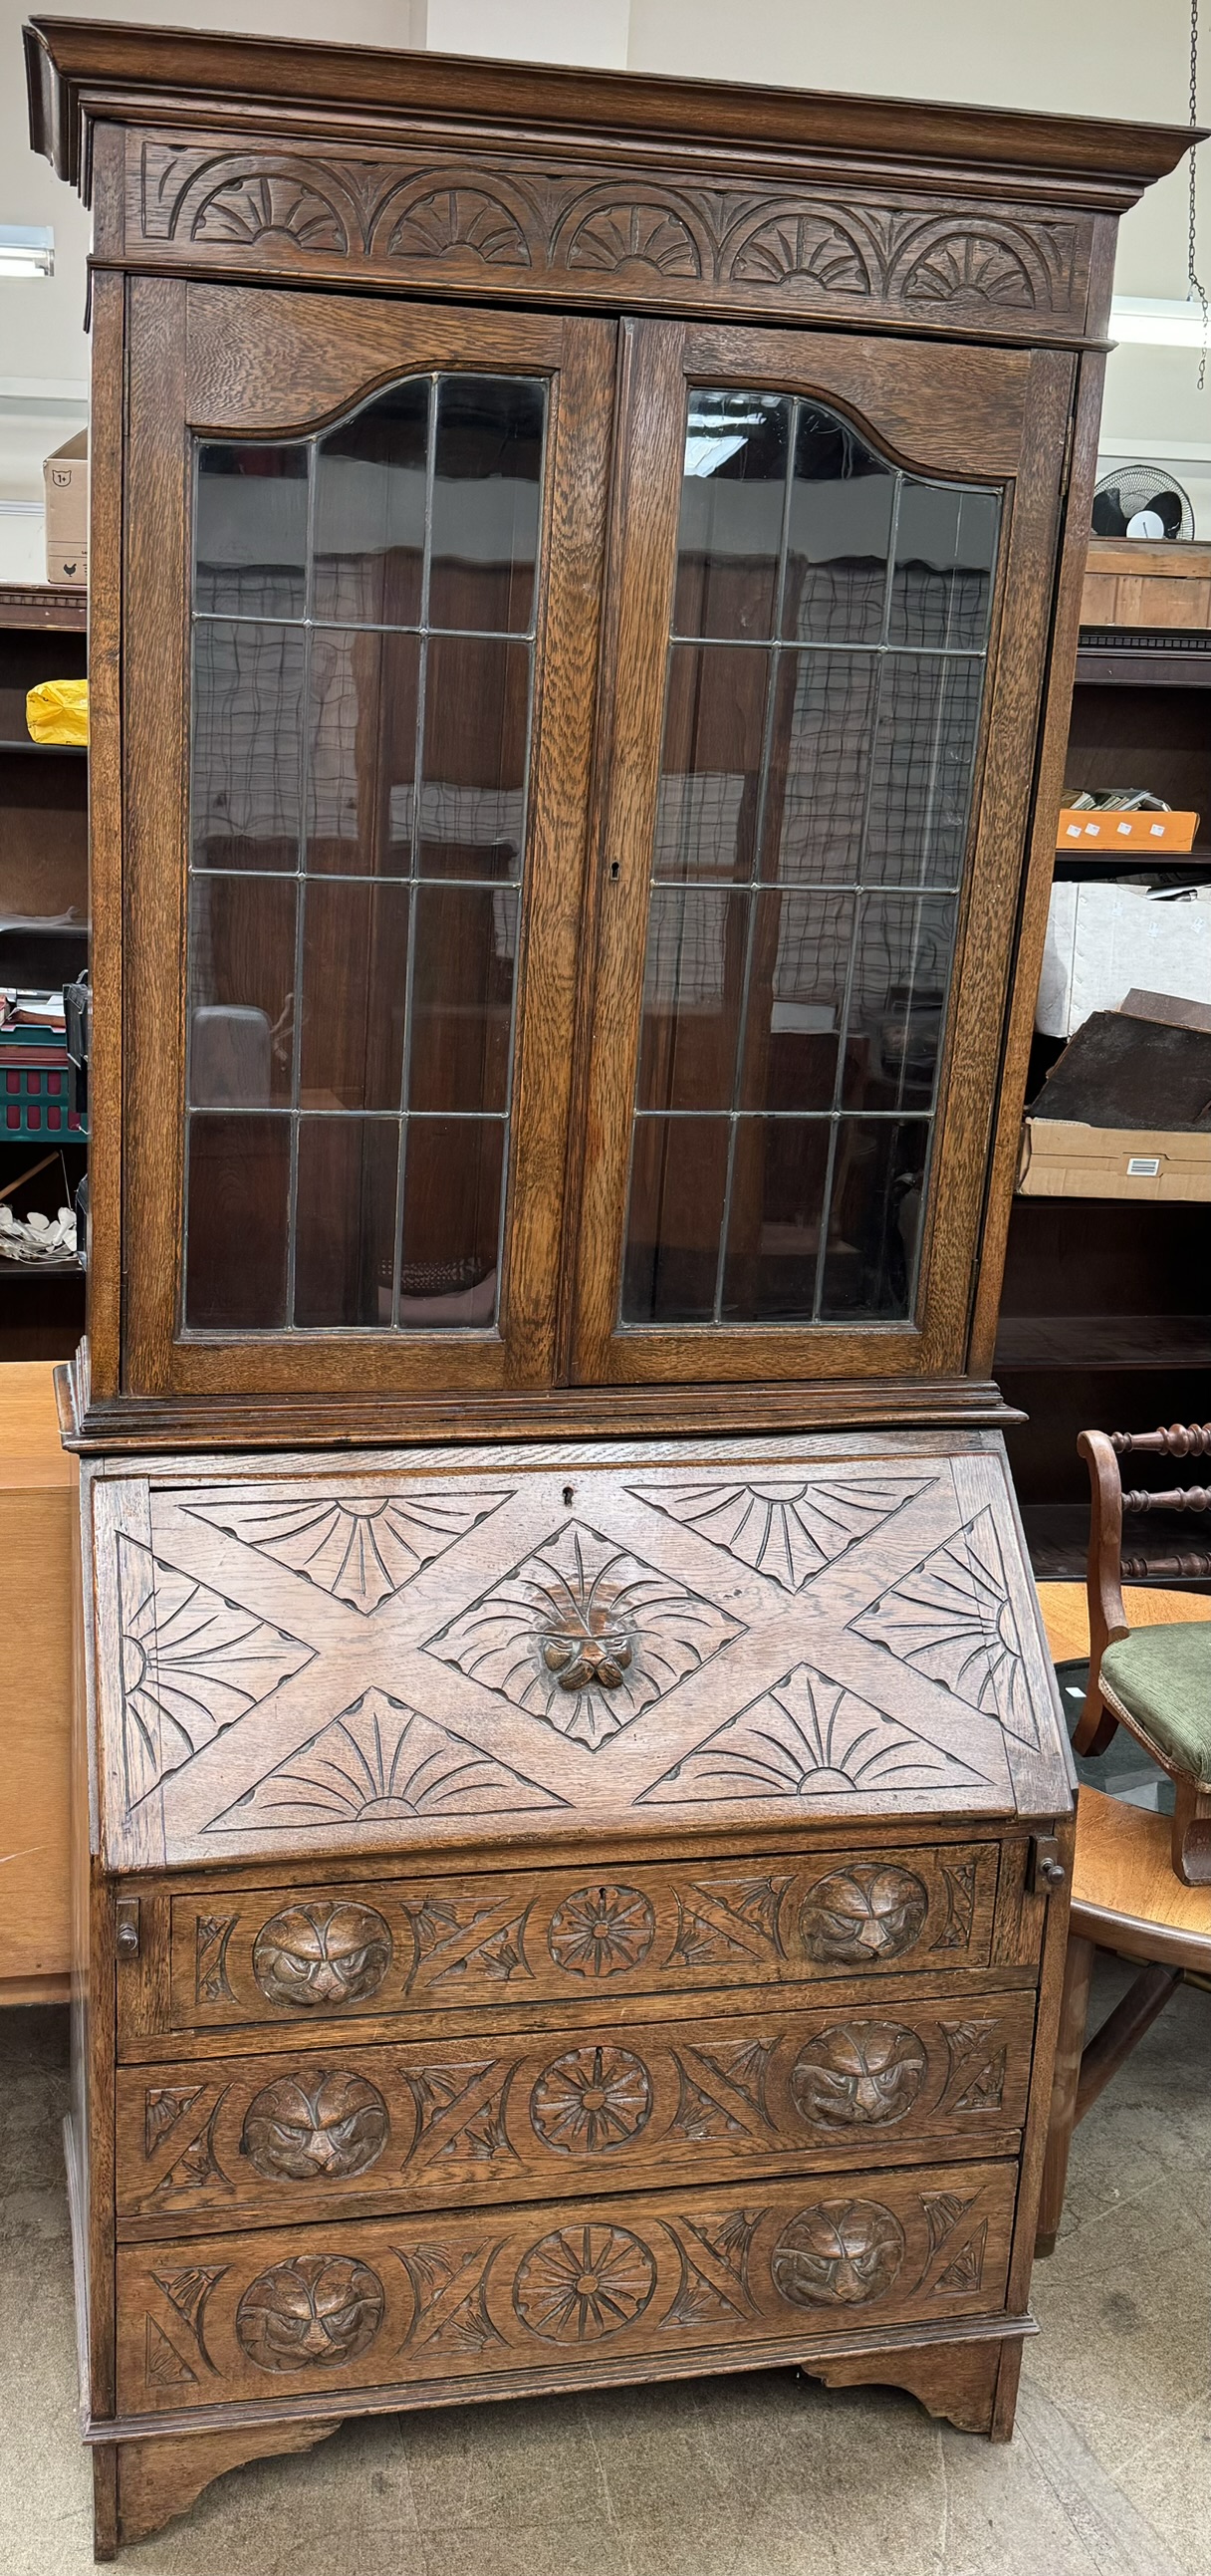 A late 19th century low countries oak bureau bookcase